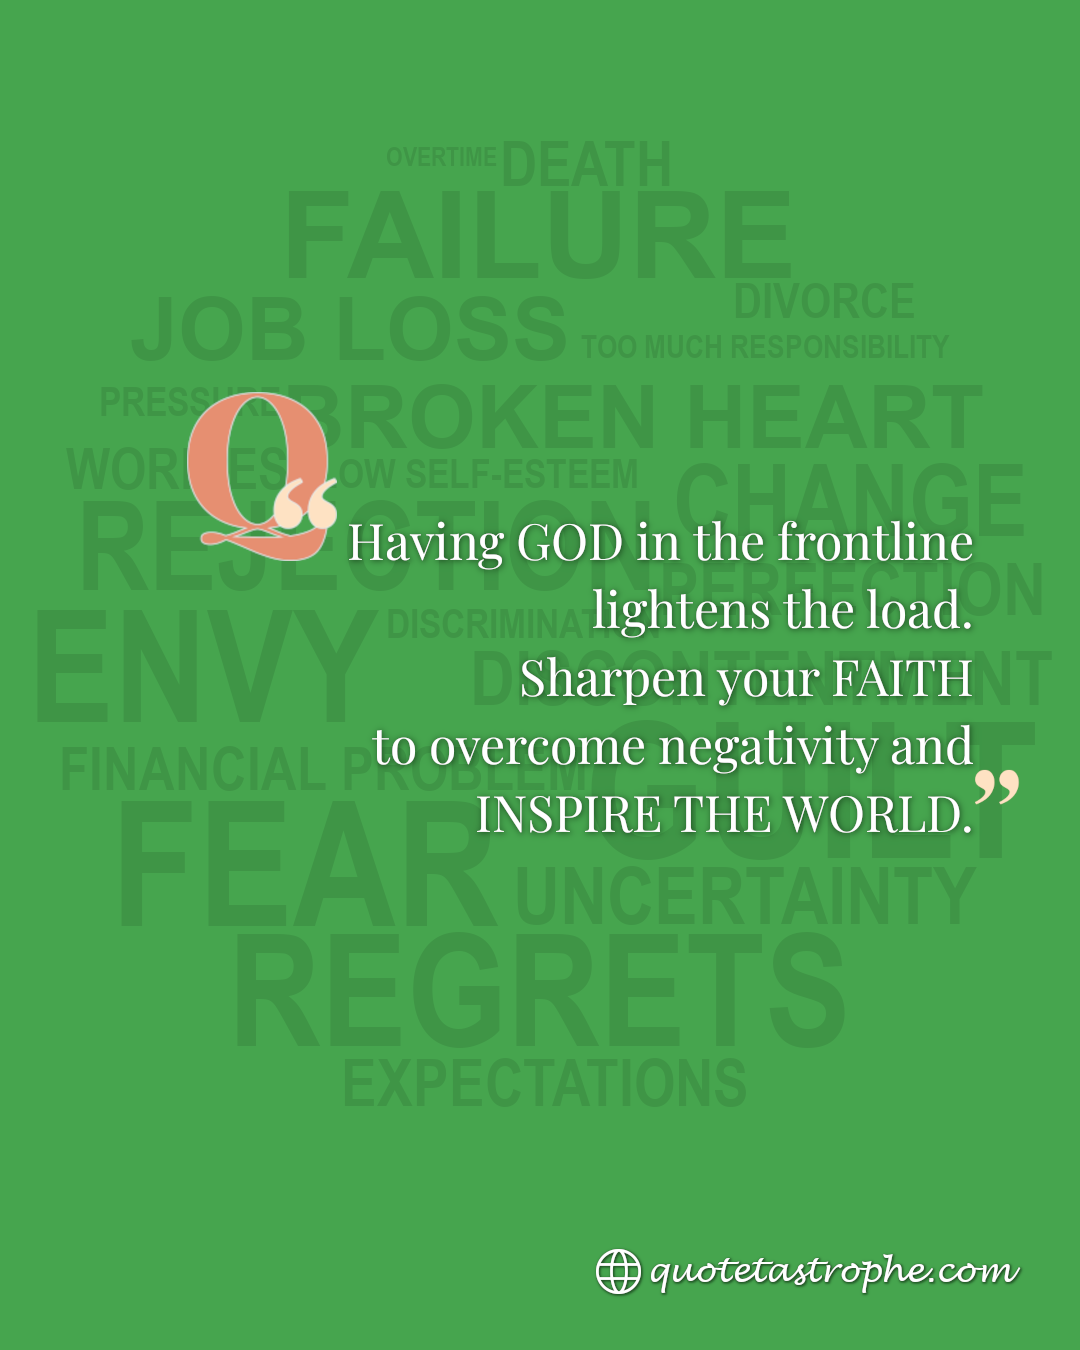 Sharpen Faith to Overcome Negativity & Inspire the World